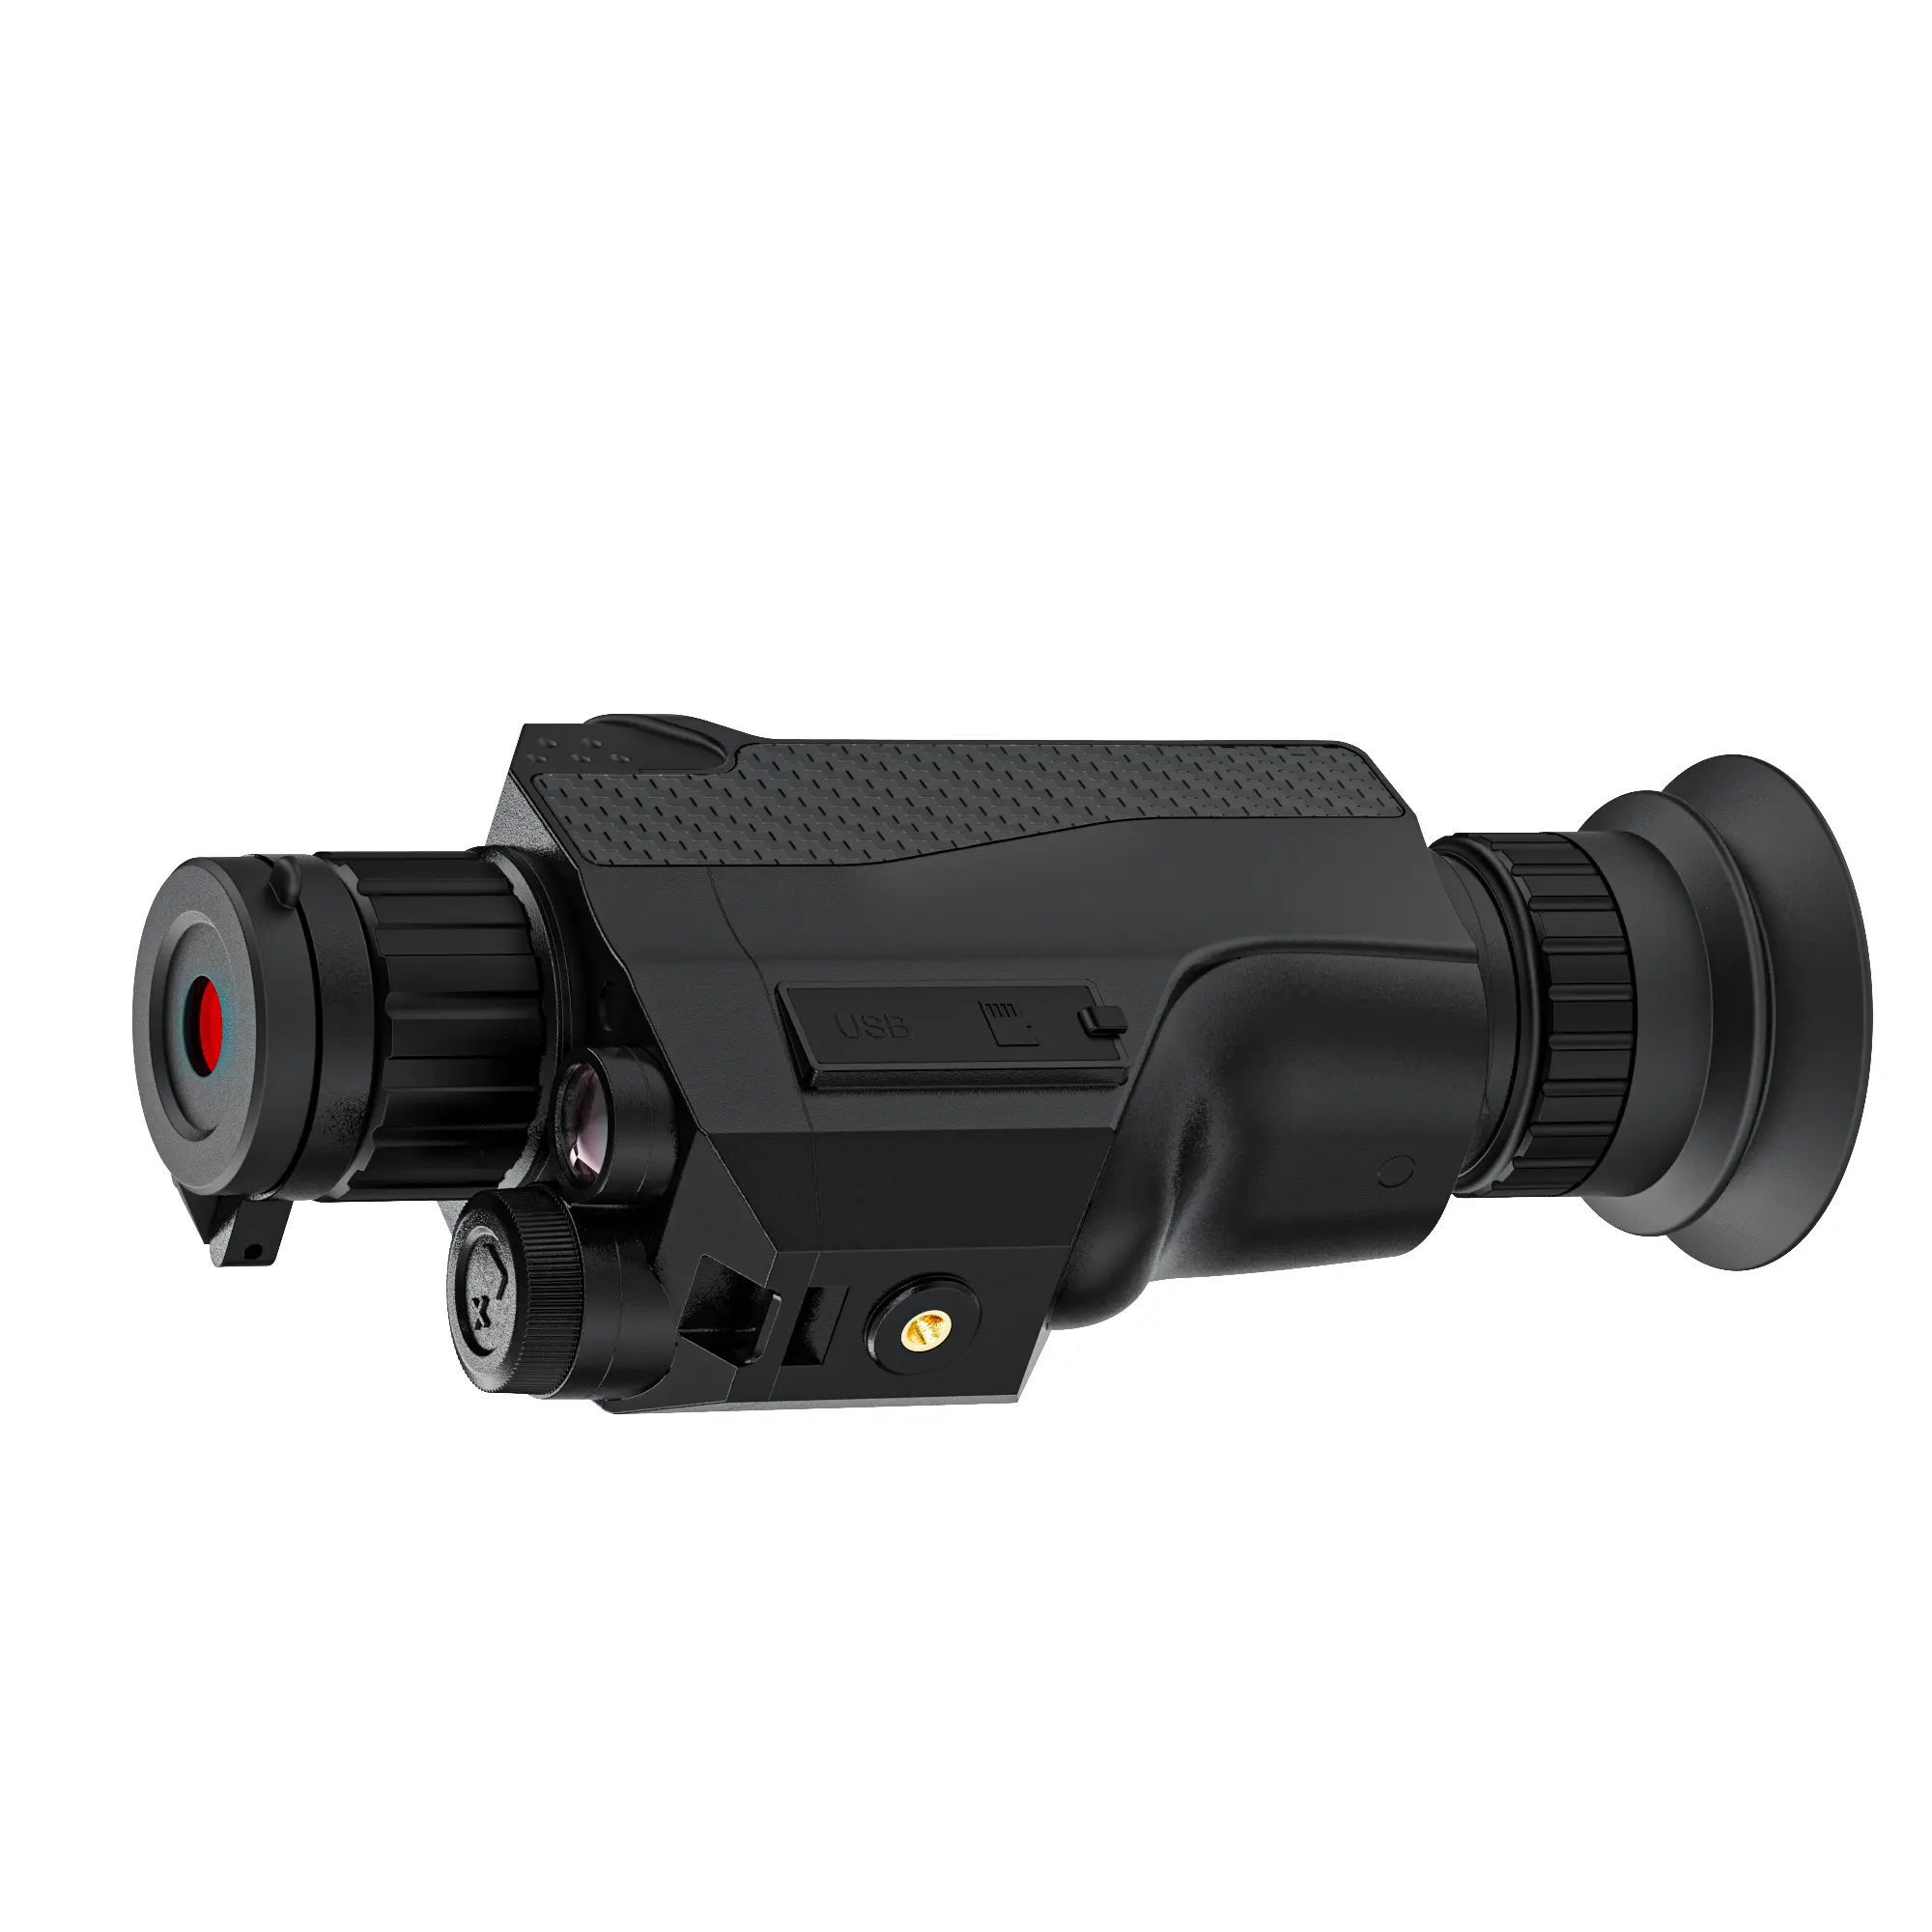 2022 Top night vision monocular infrared handheld night vision telescope